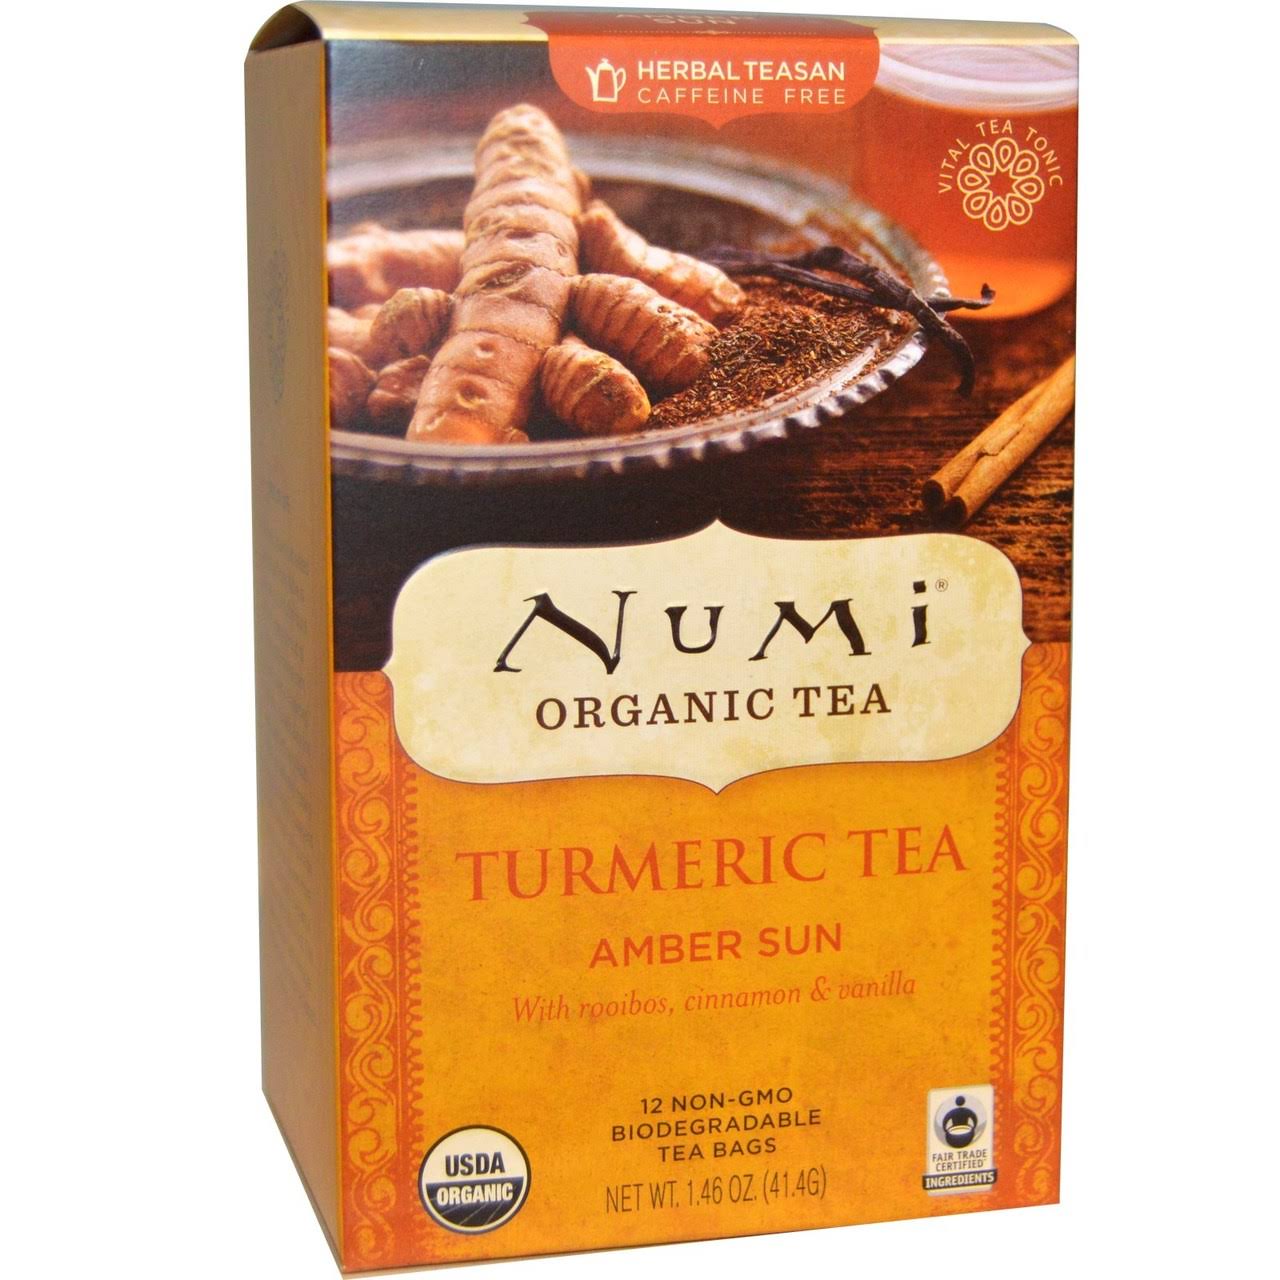 Numi Organic Tea Amber Sun Turmeric Tea Bags - 12 ct